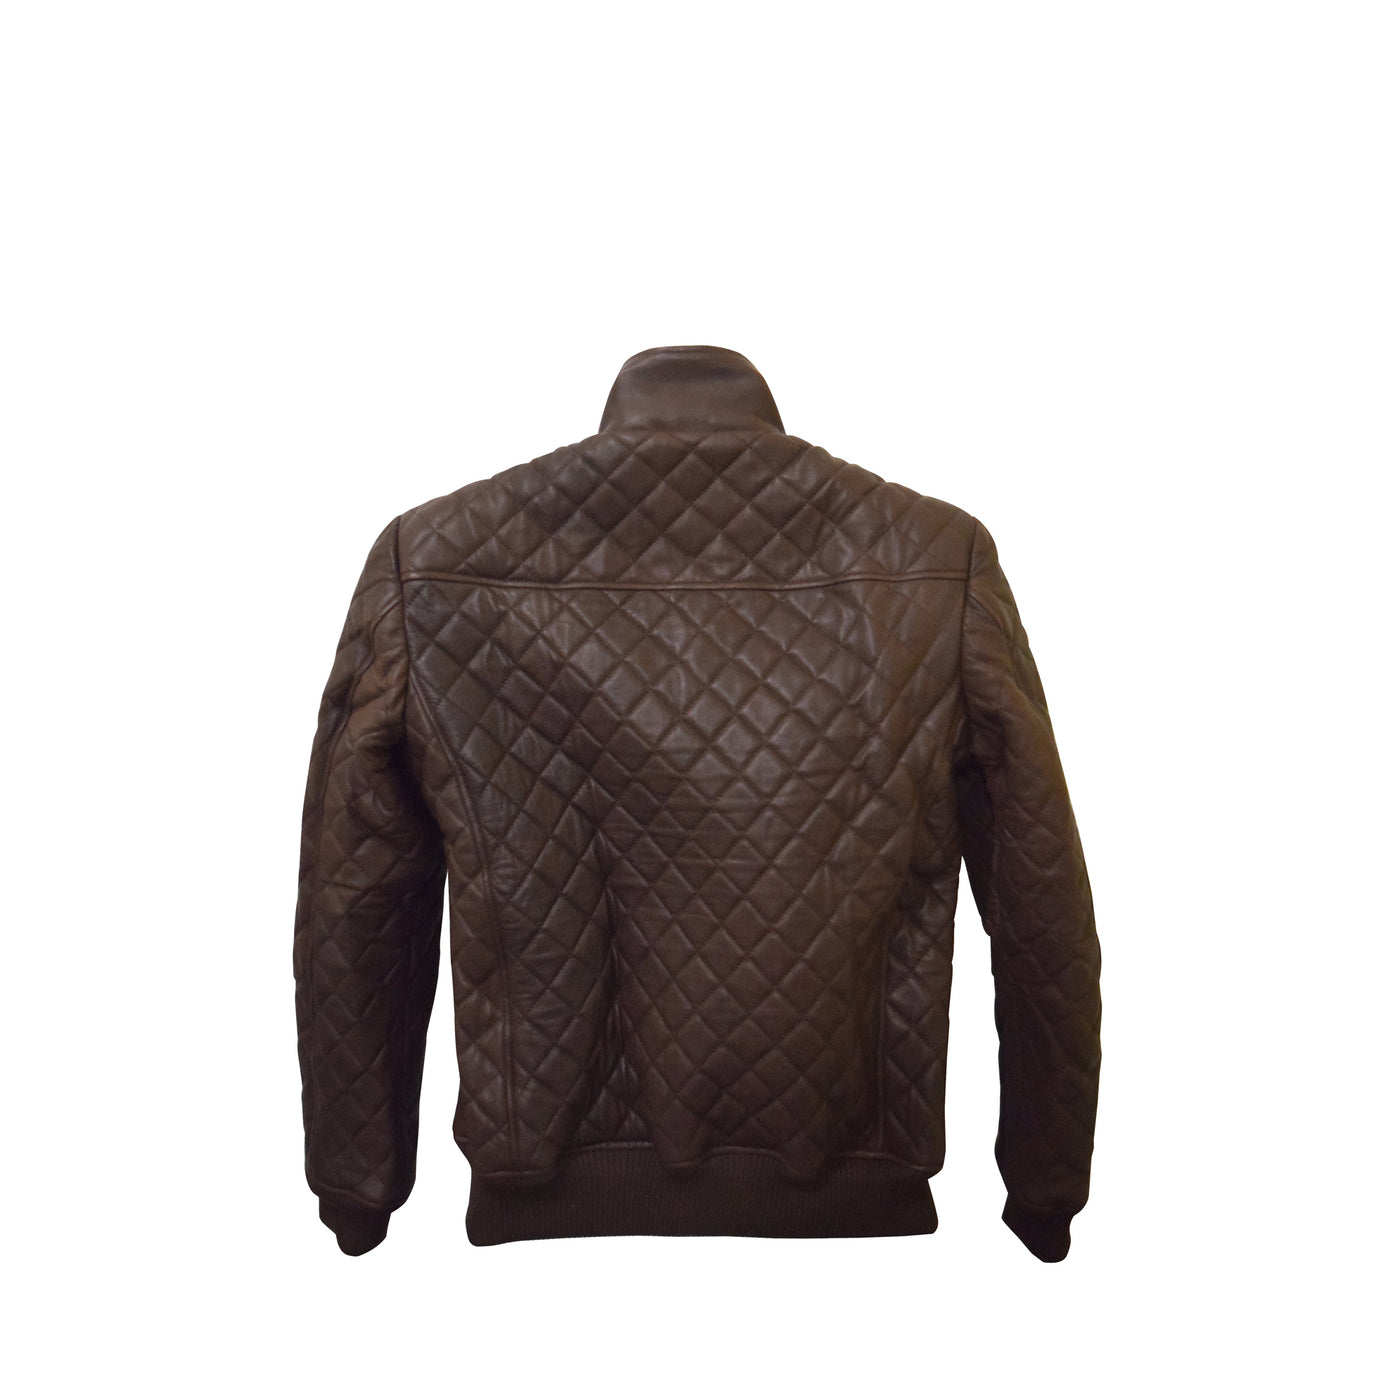 Stylish Edmund's Brown Checkered Jacket for men